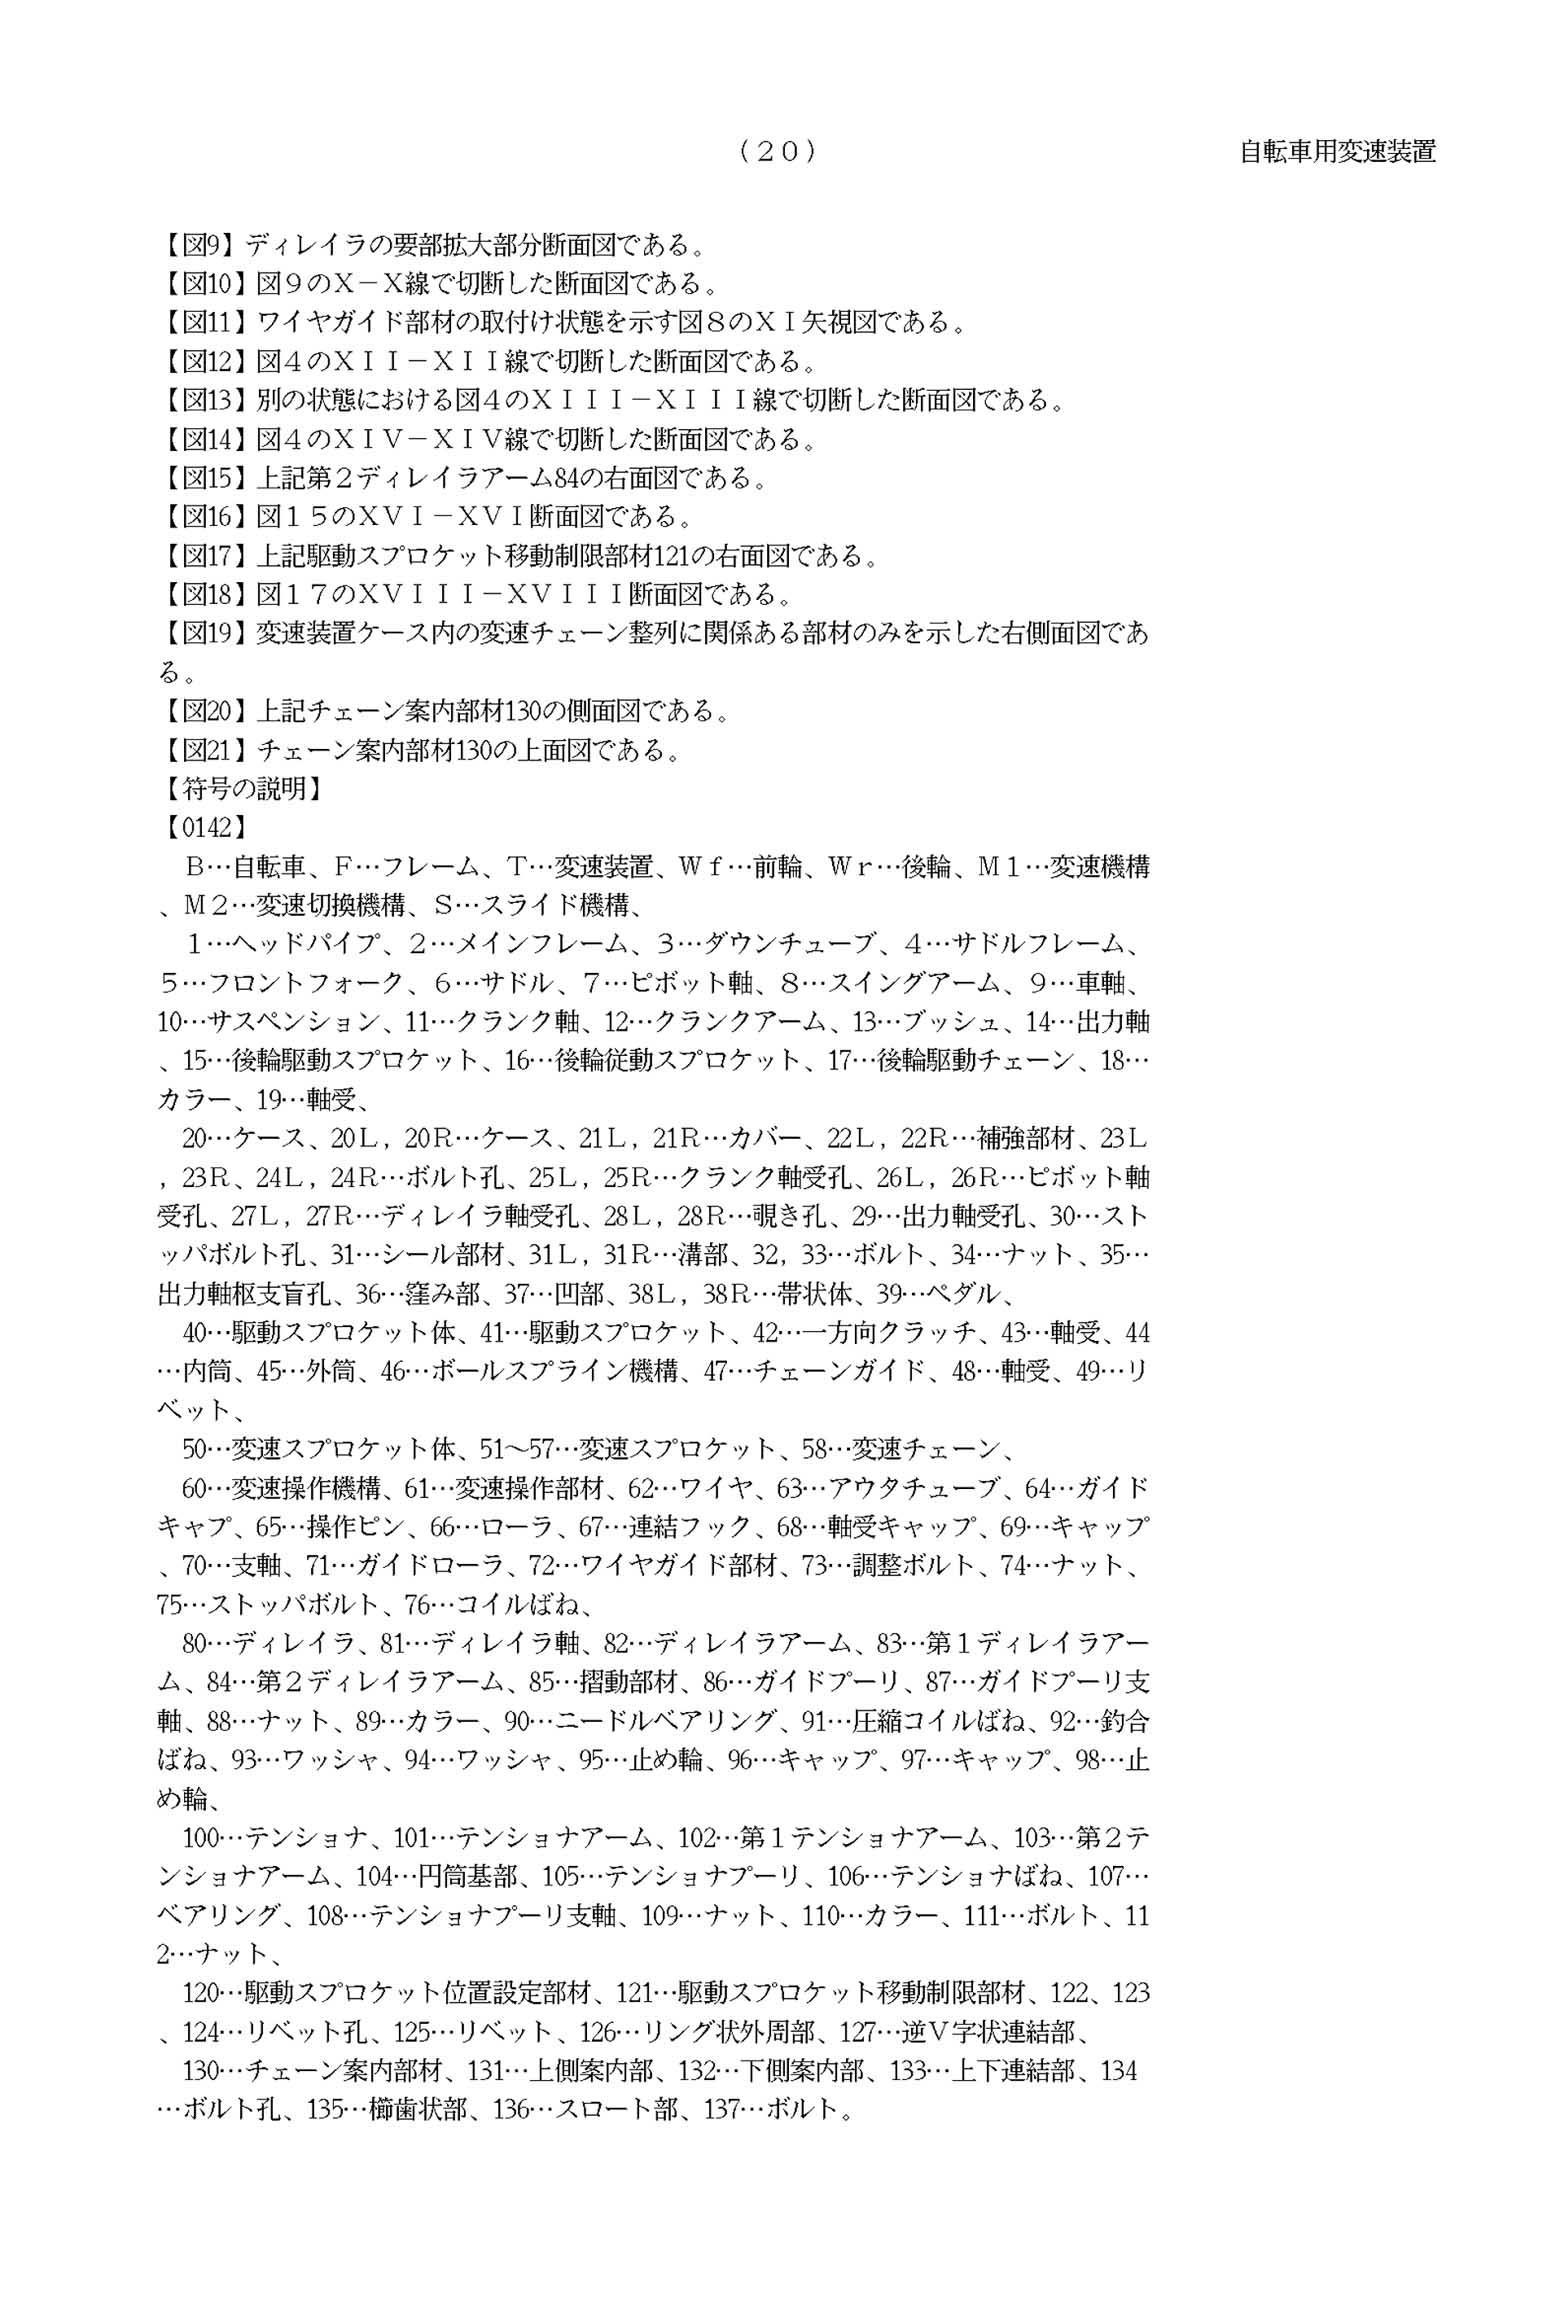 Japanese Patent 4286681 - Honda page 20 main image